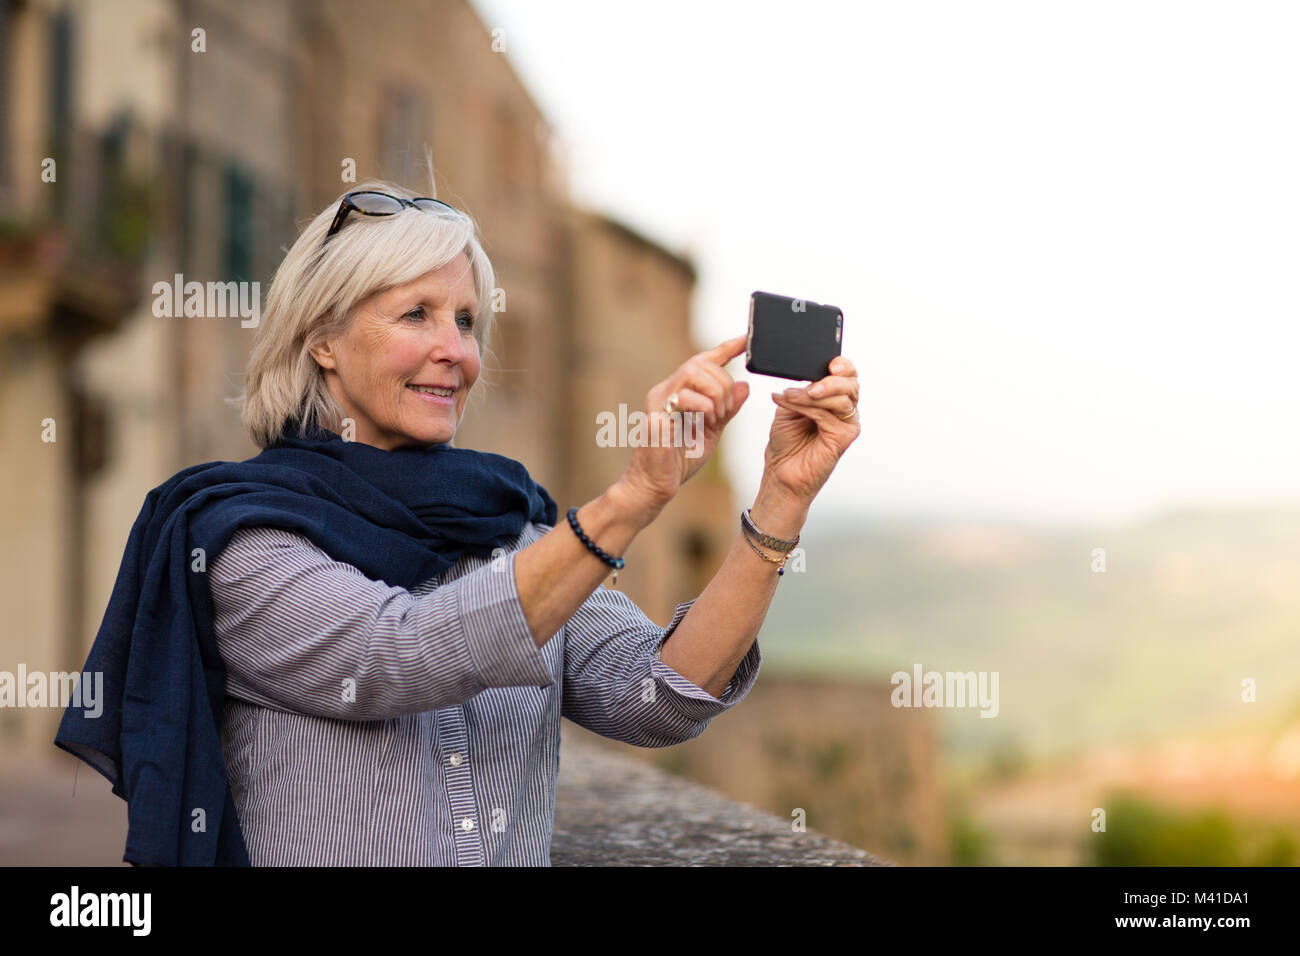 Senior woman on vacation taking a photo Stock Photo